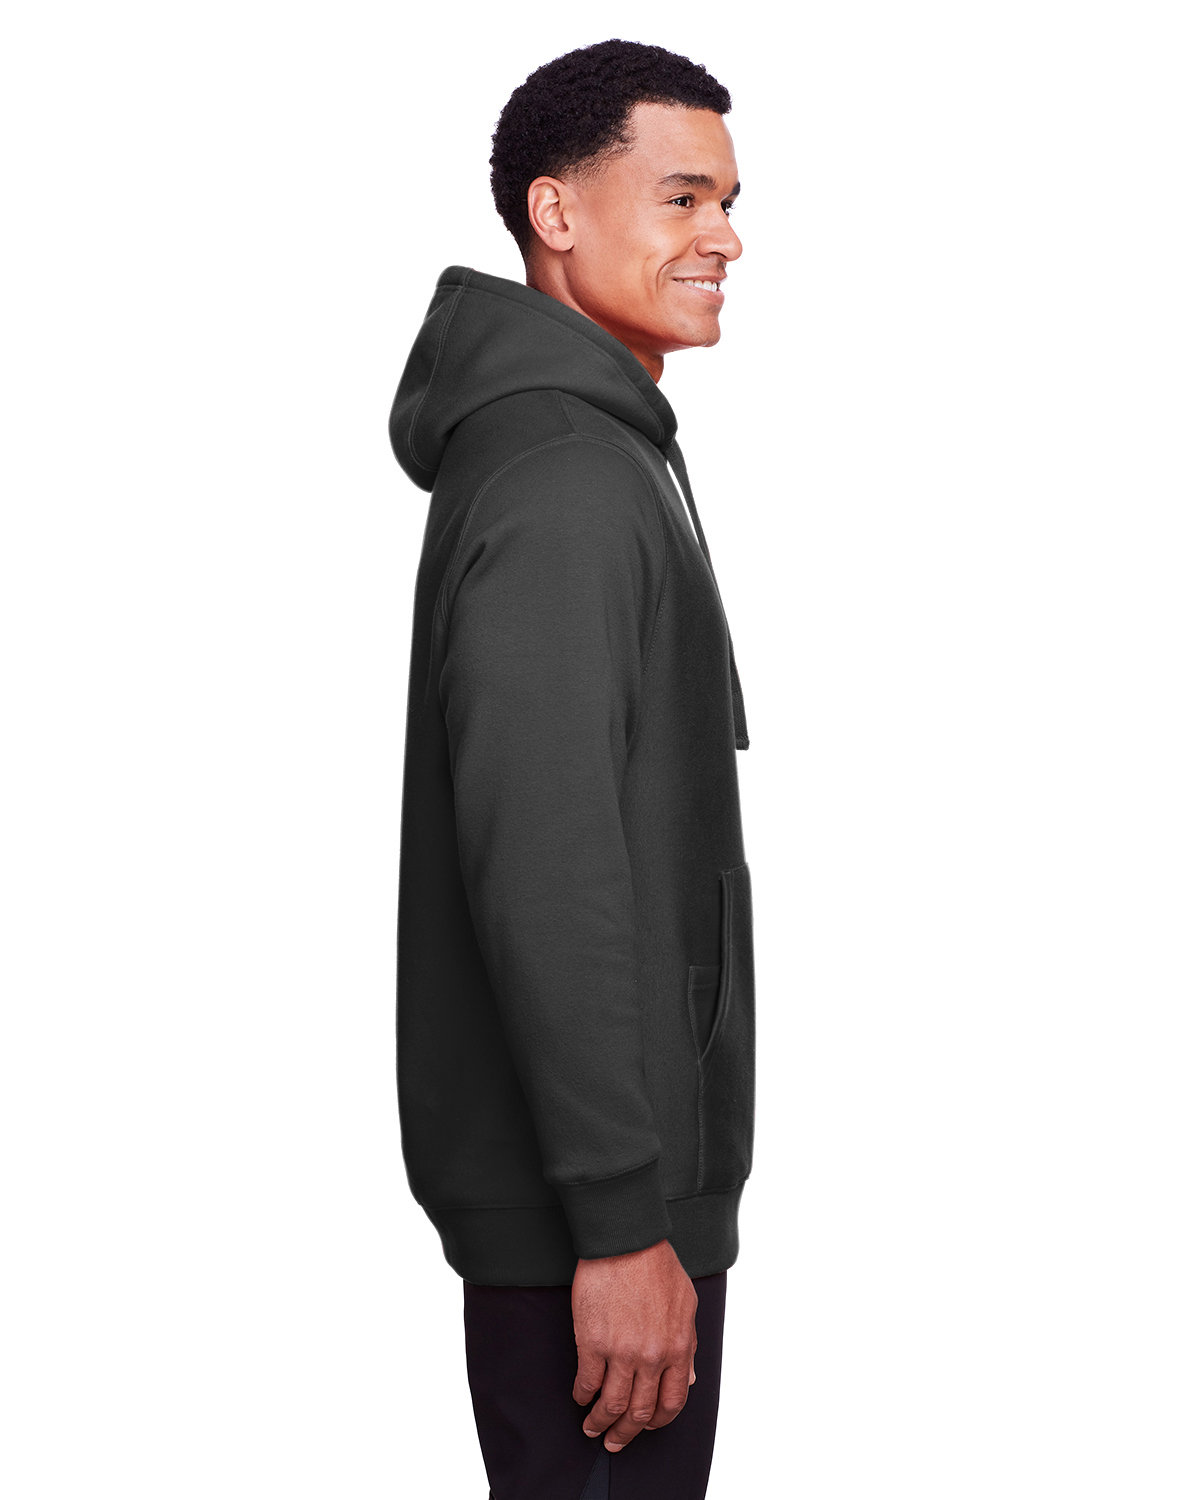 Soardogg apparel hydro3 esports shirt, hoodie, sweater, long